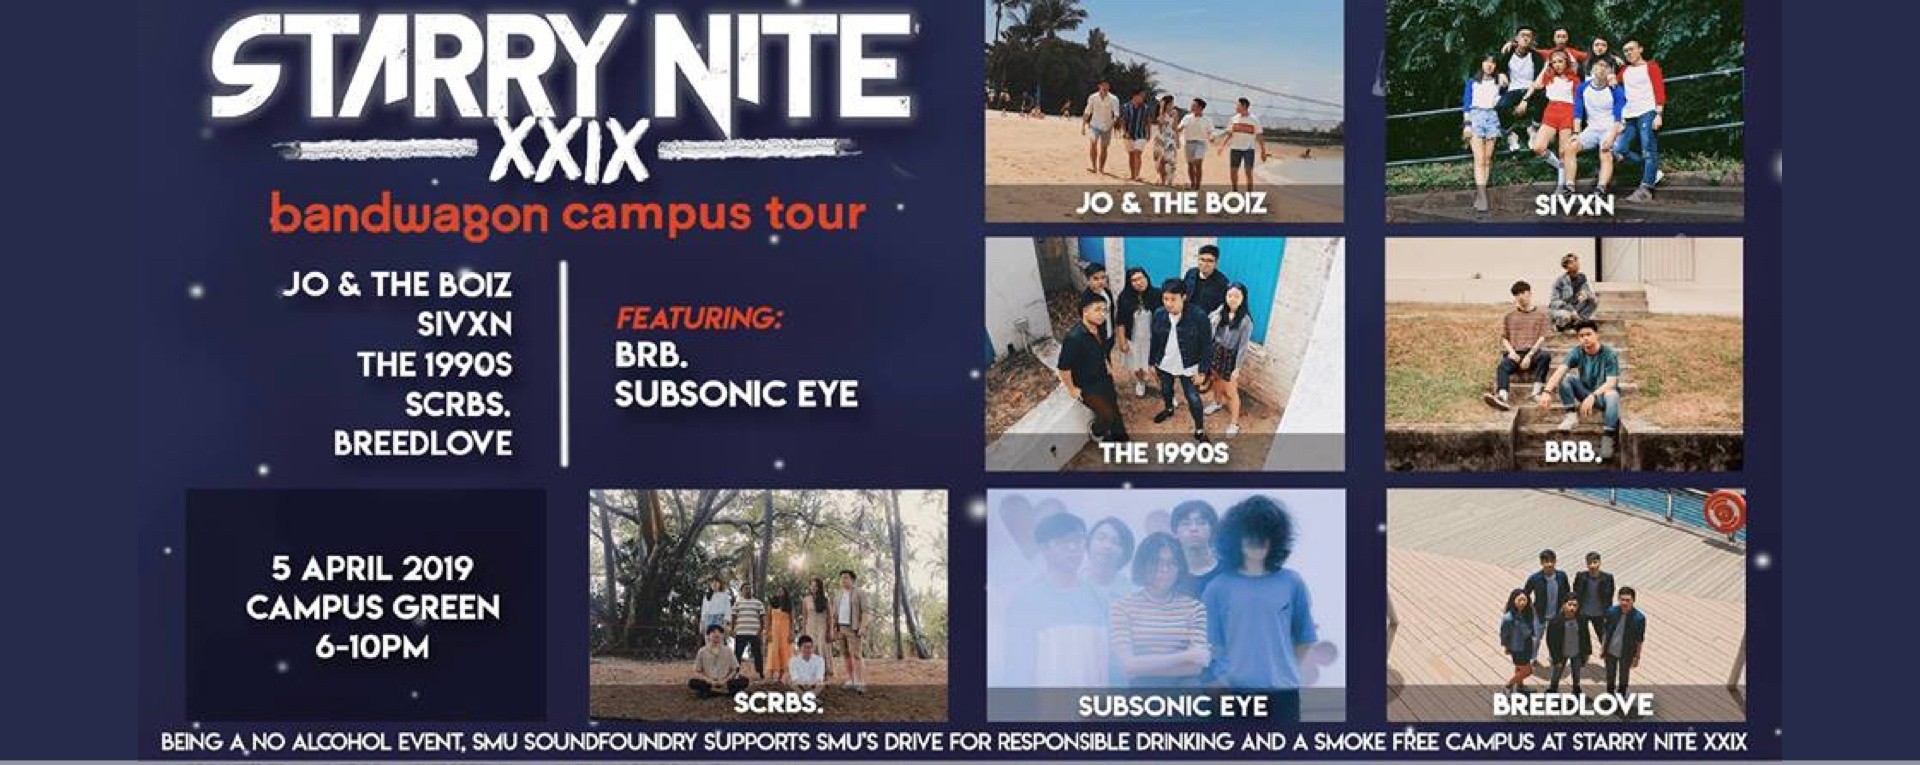 Starry Nite XXIX x Bandwagon Campus Tour